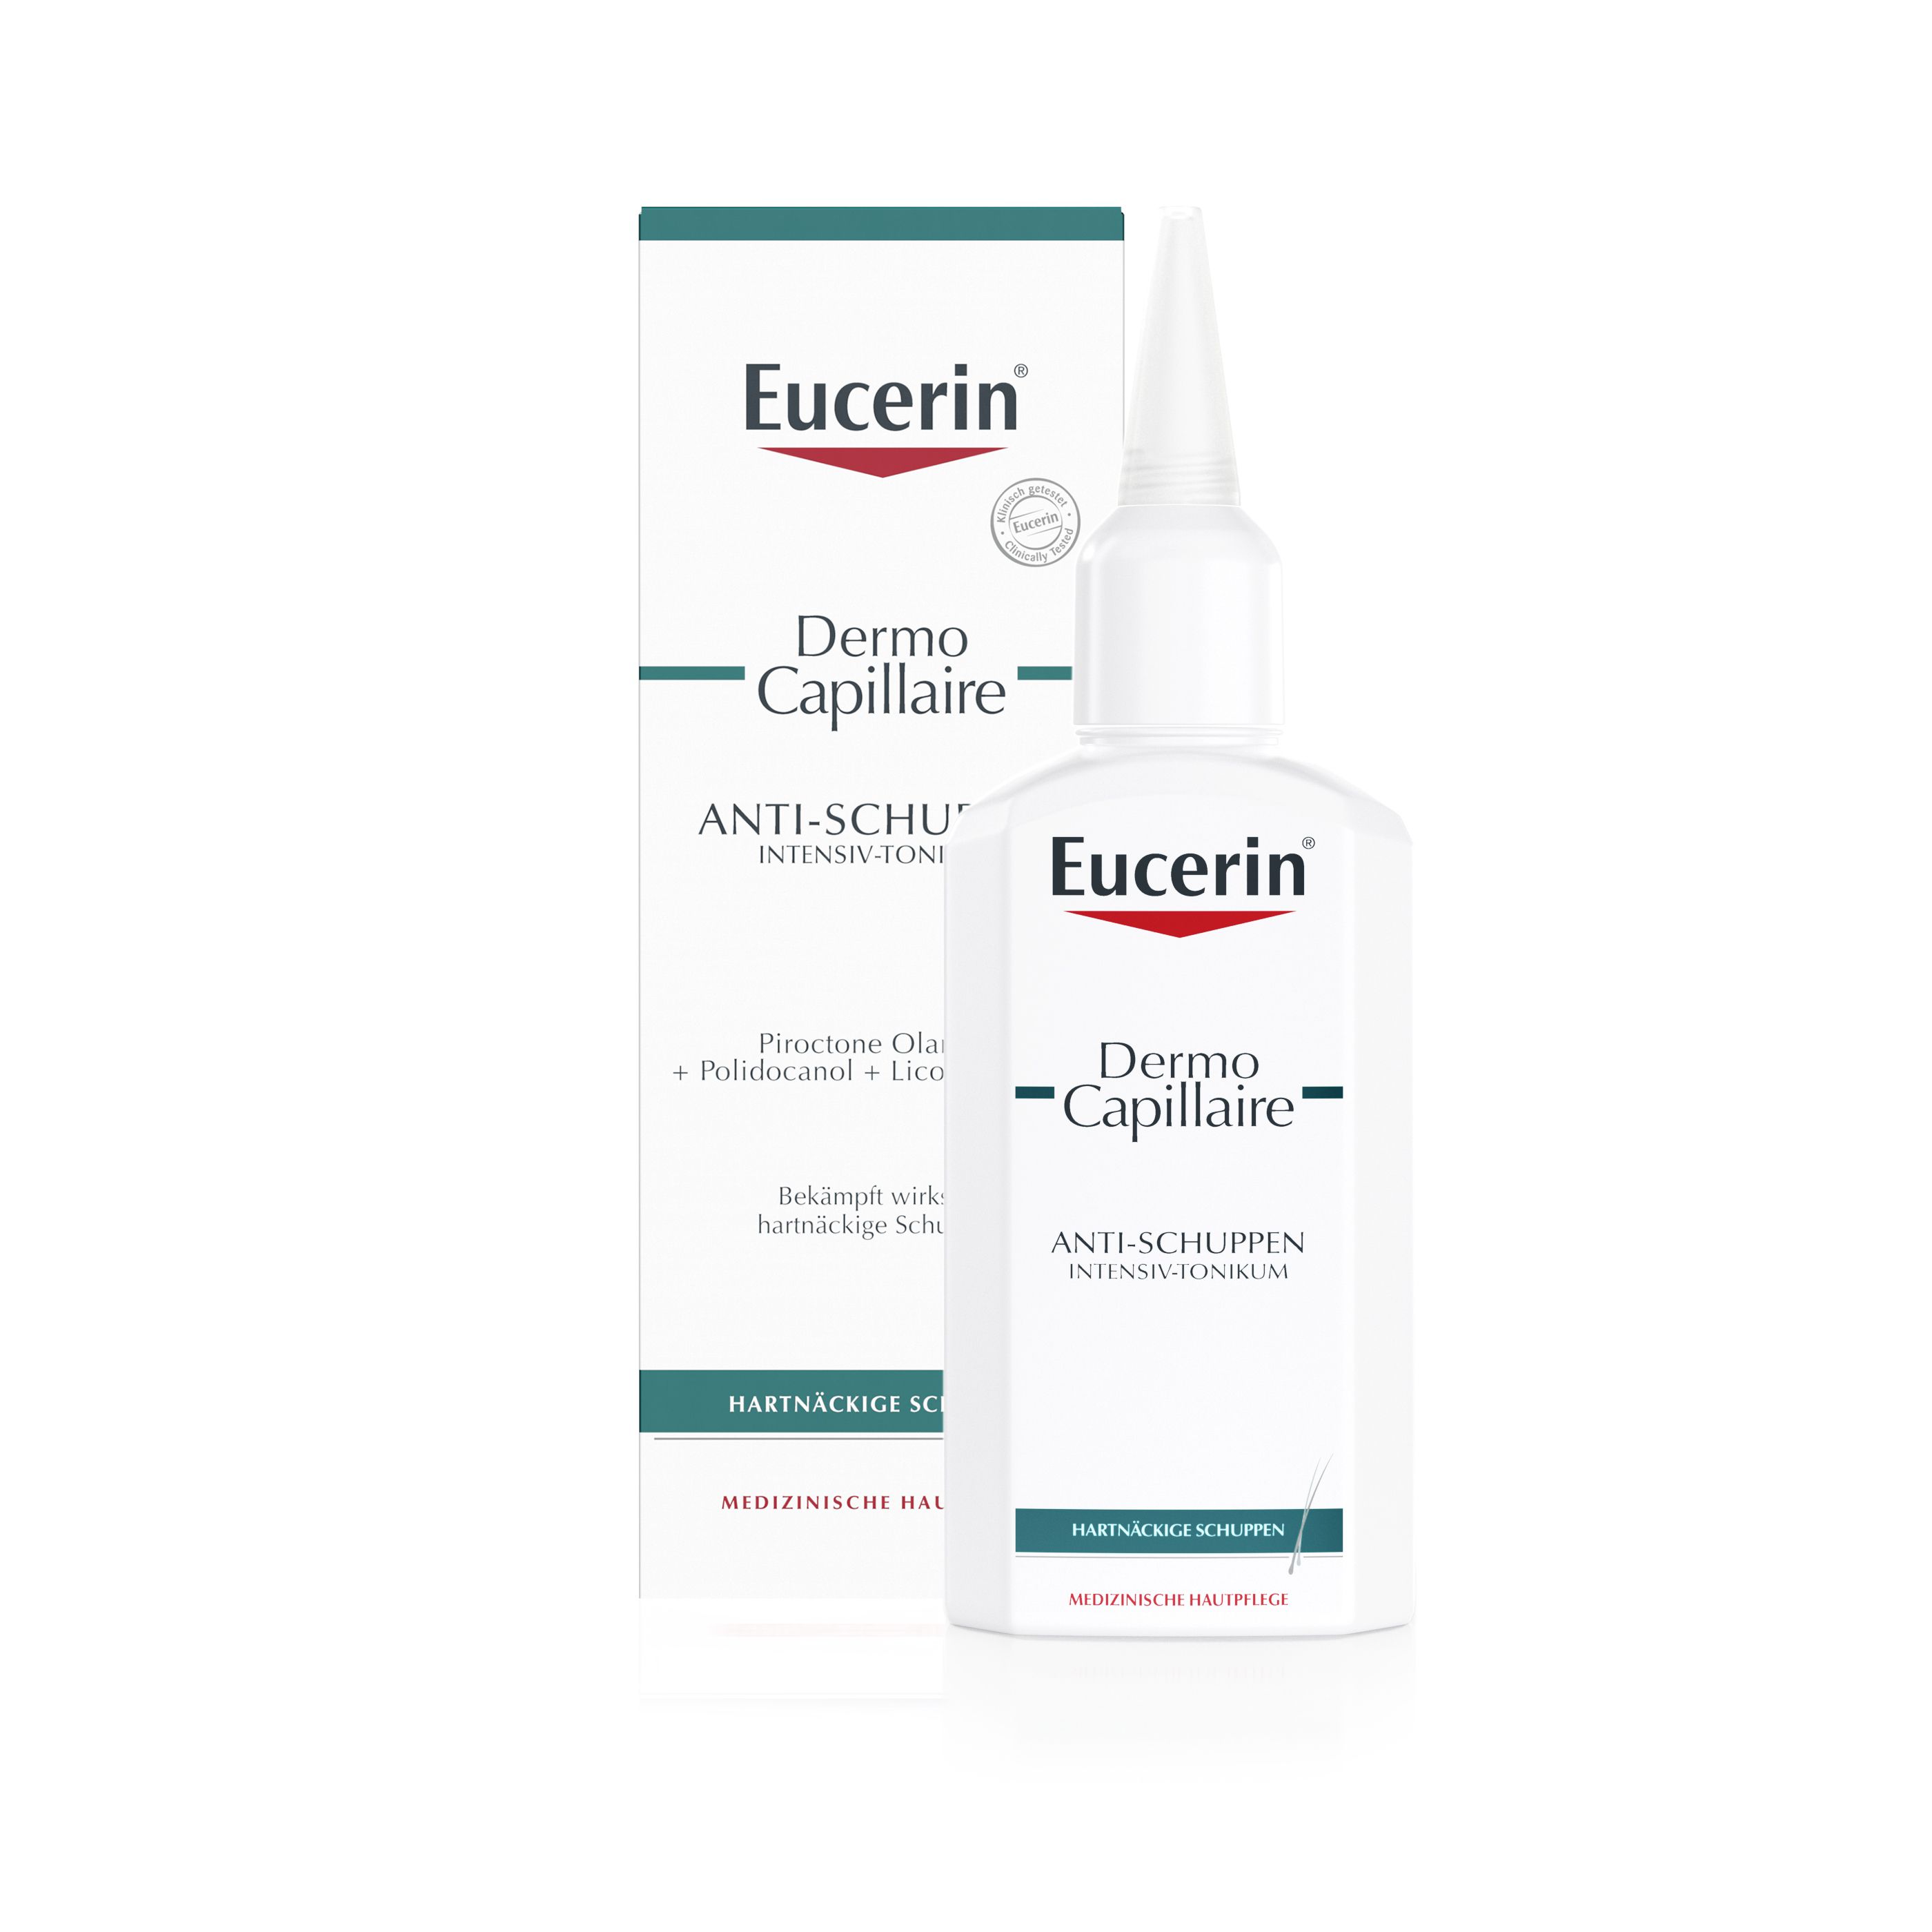 Eucerin® DermoCapillaire Anti-Schuppen Intensiv-Tonikum – bekämpft wirksam hartnäckige Schuppen und mindert Juckreiz